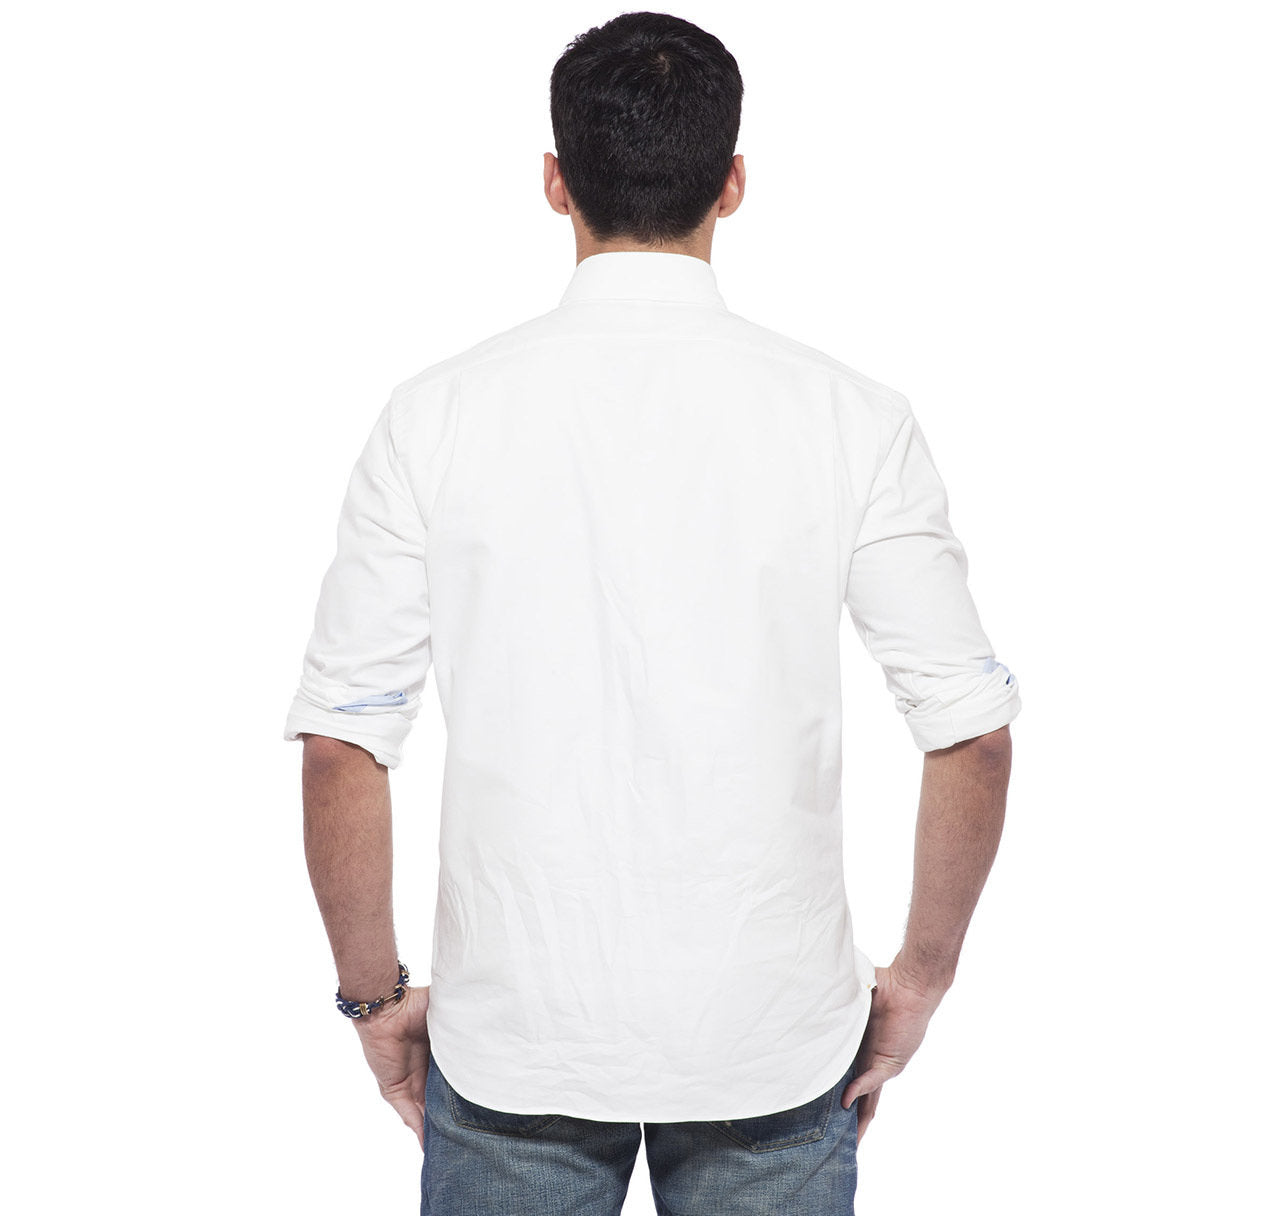 Sir Jack's Sudbury Oxford Shirt in White